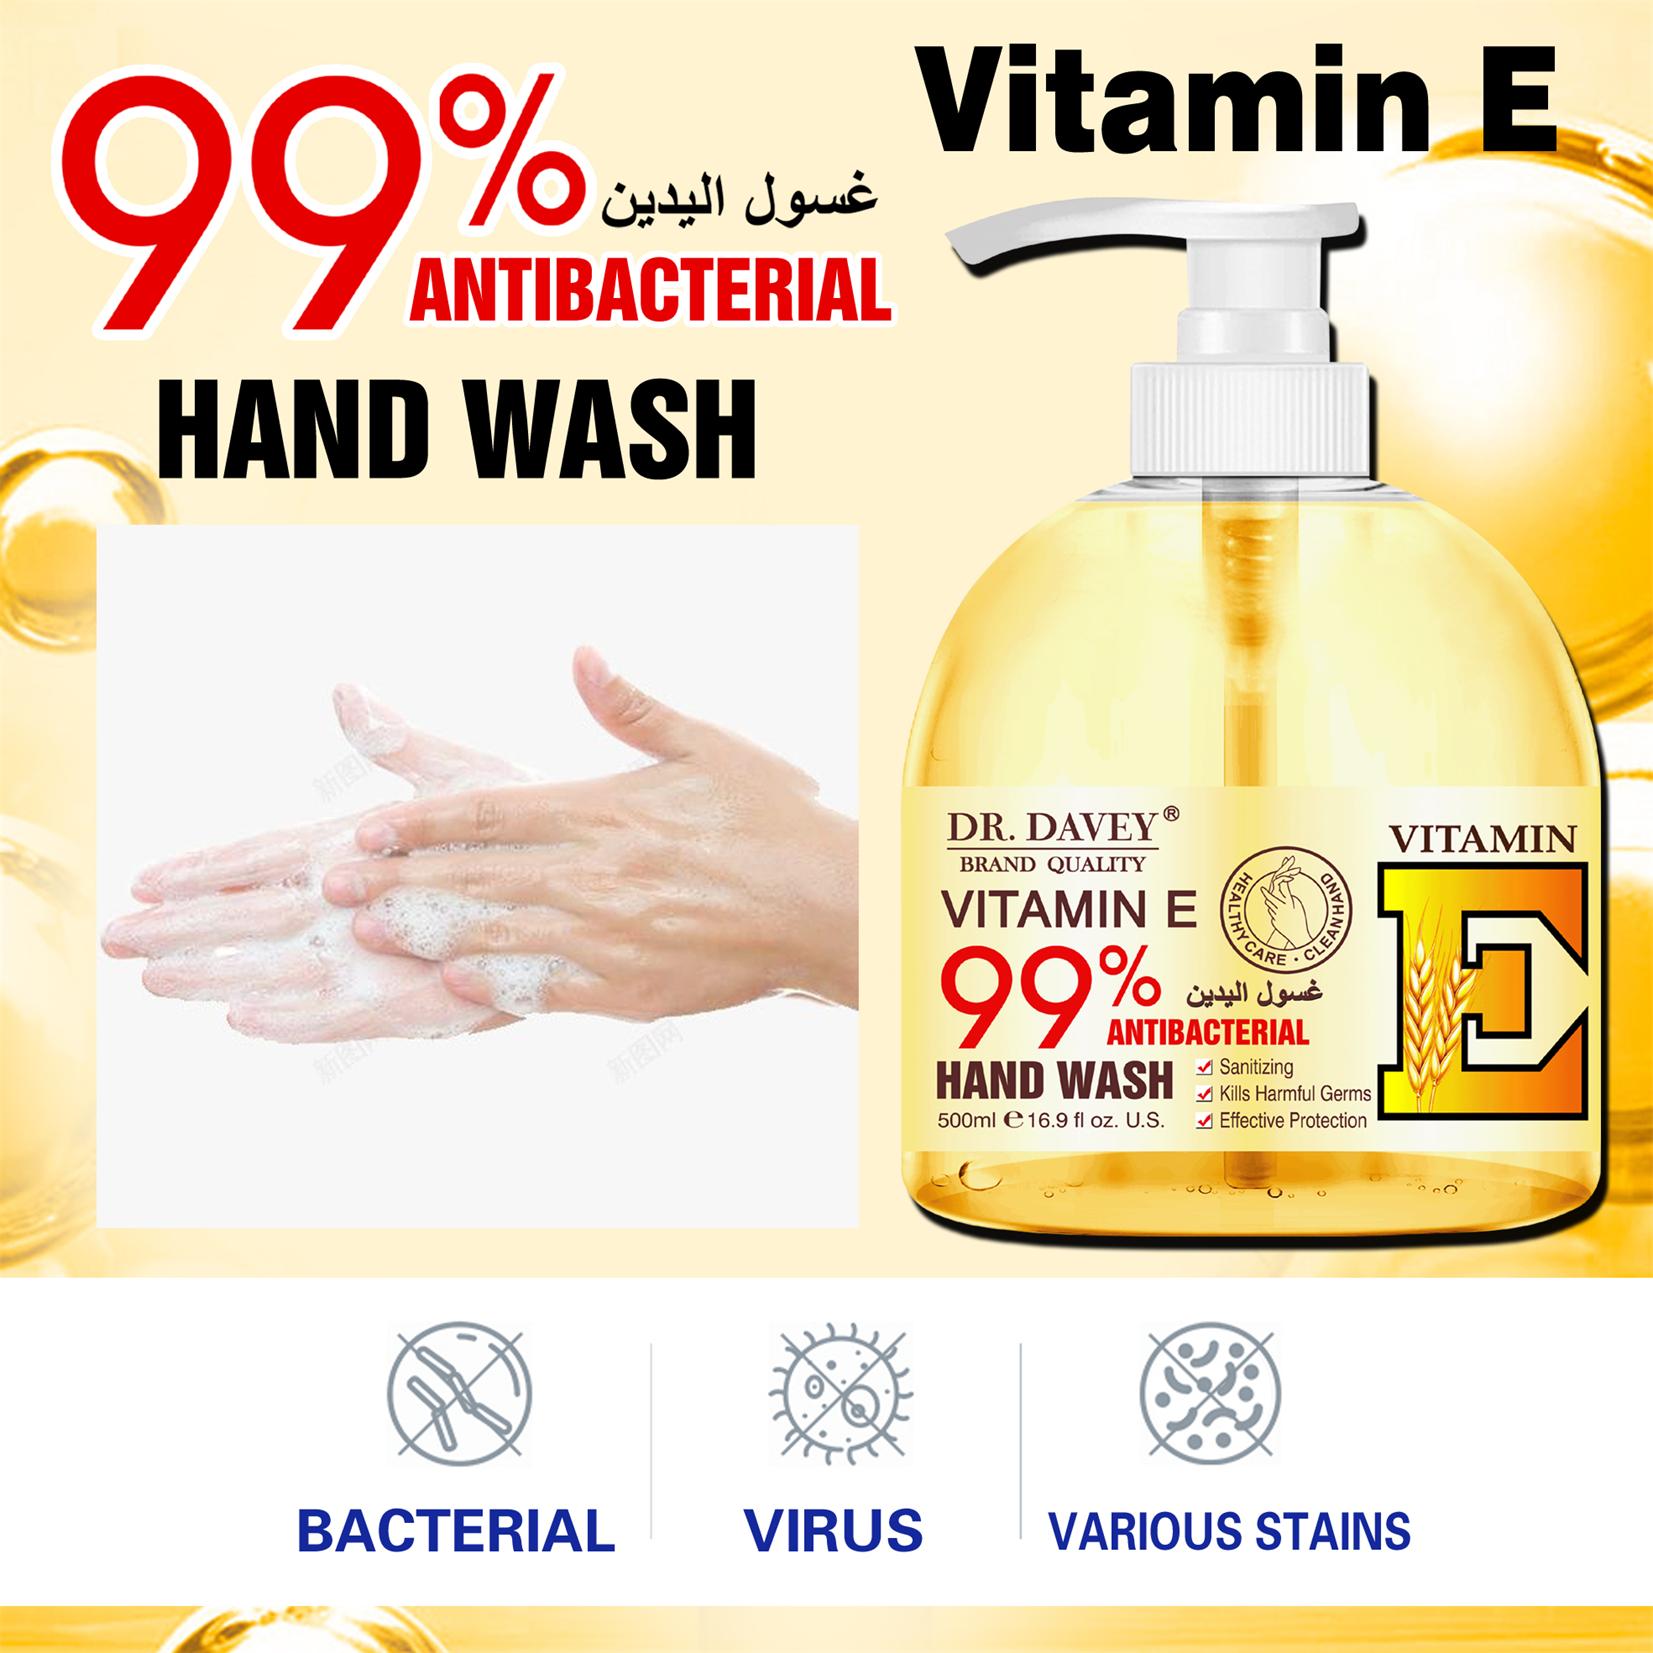 Vitamin E hand wash